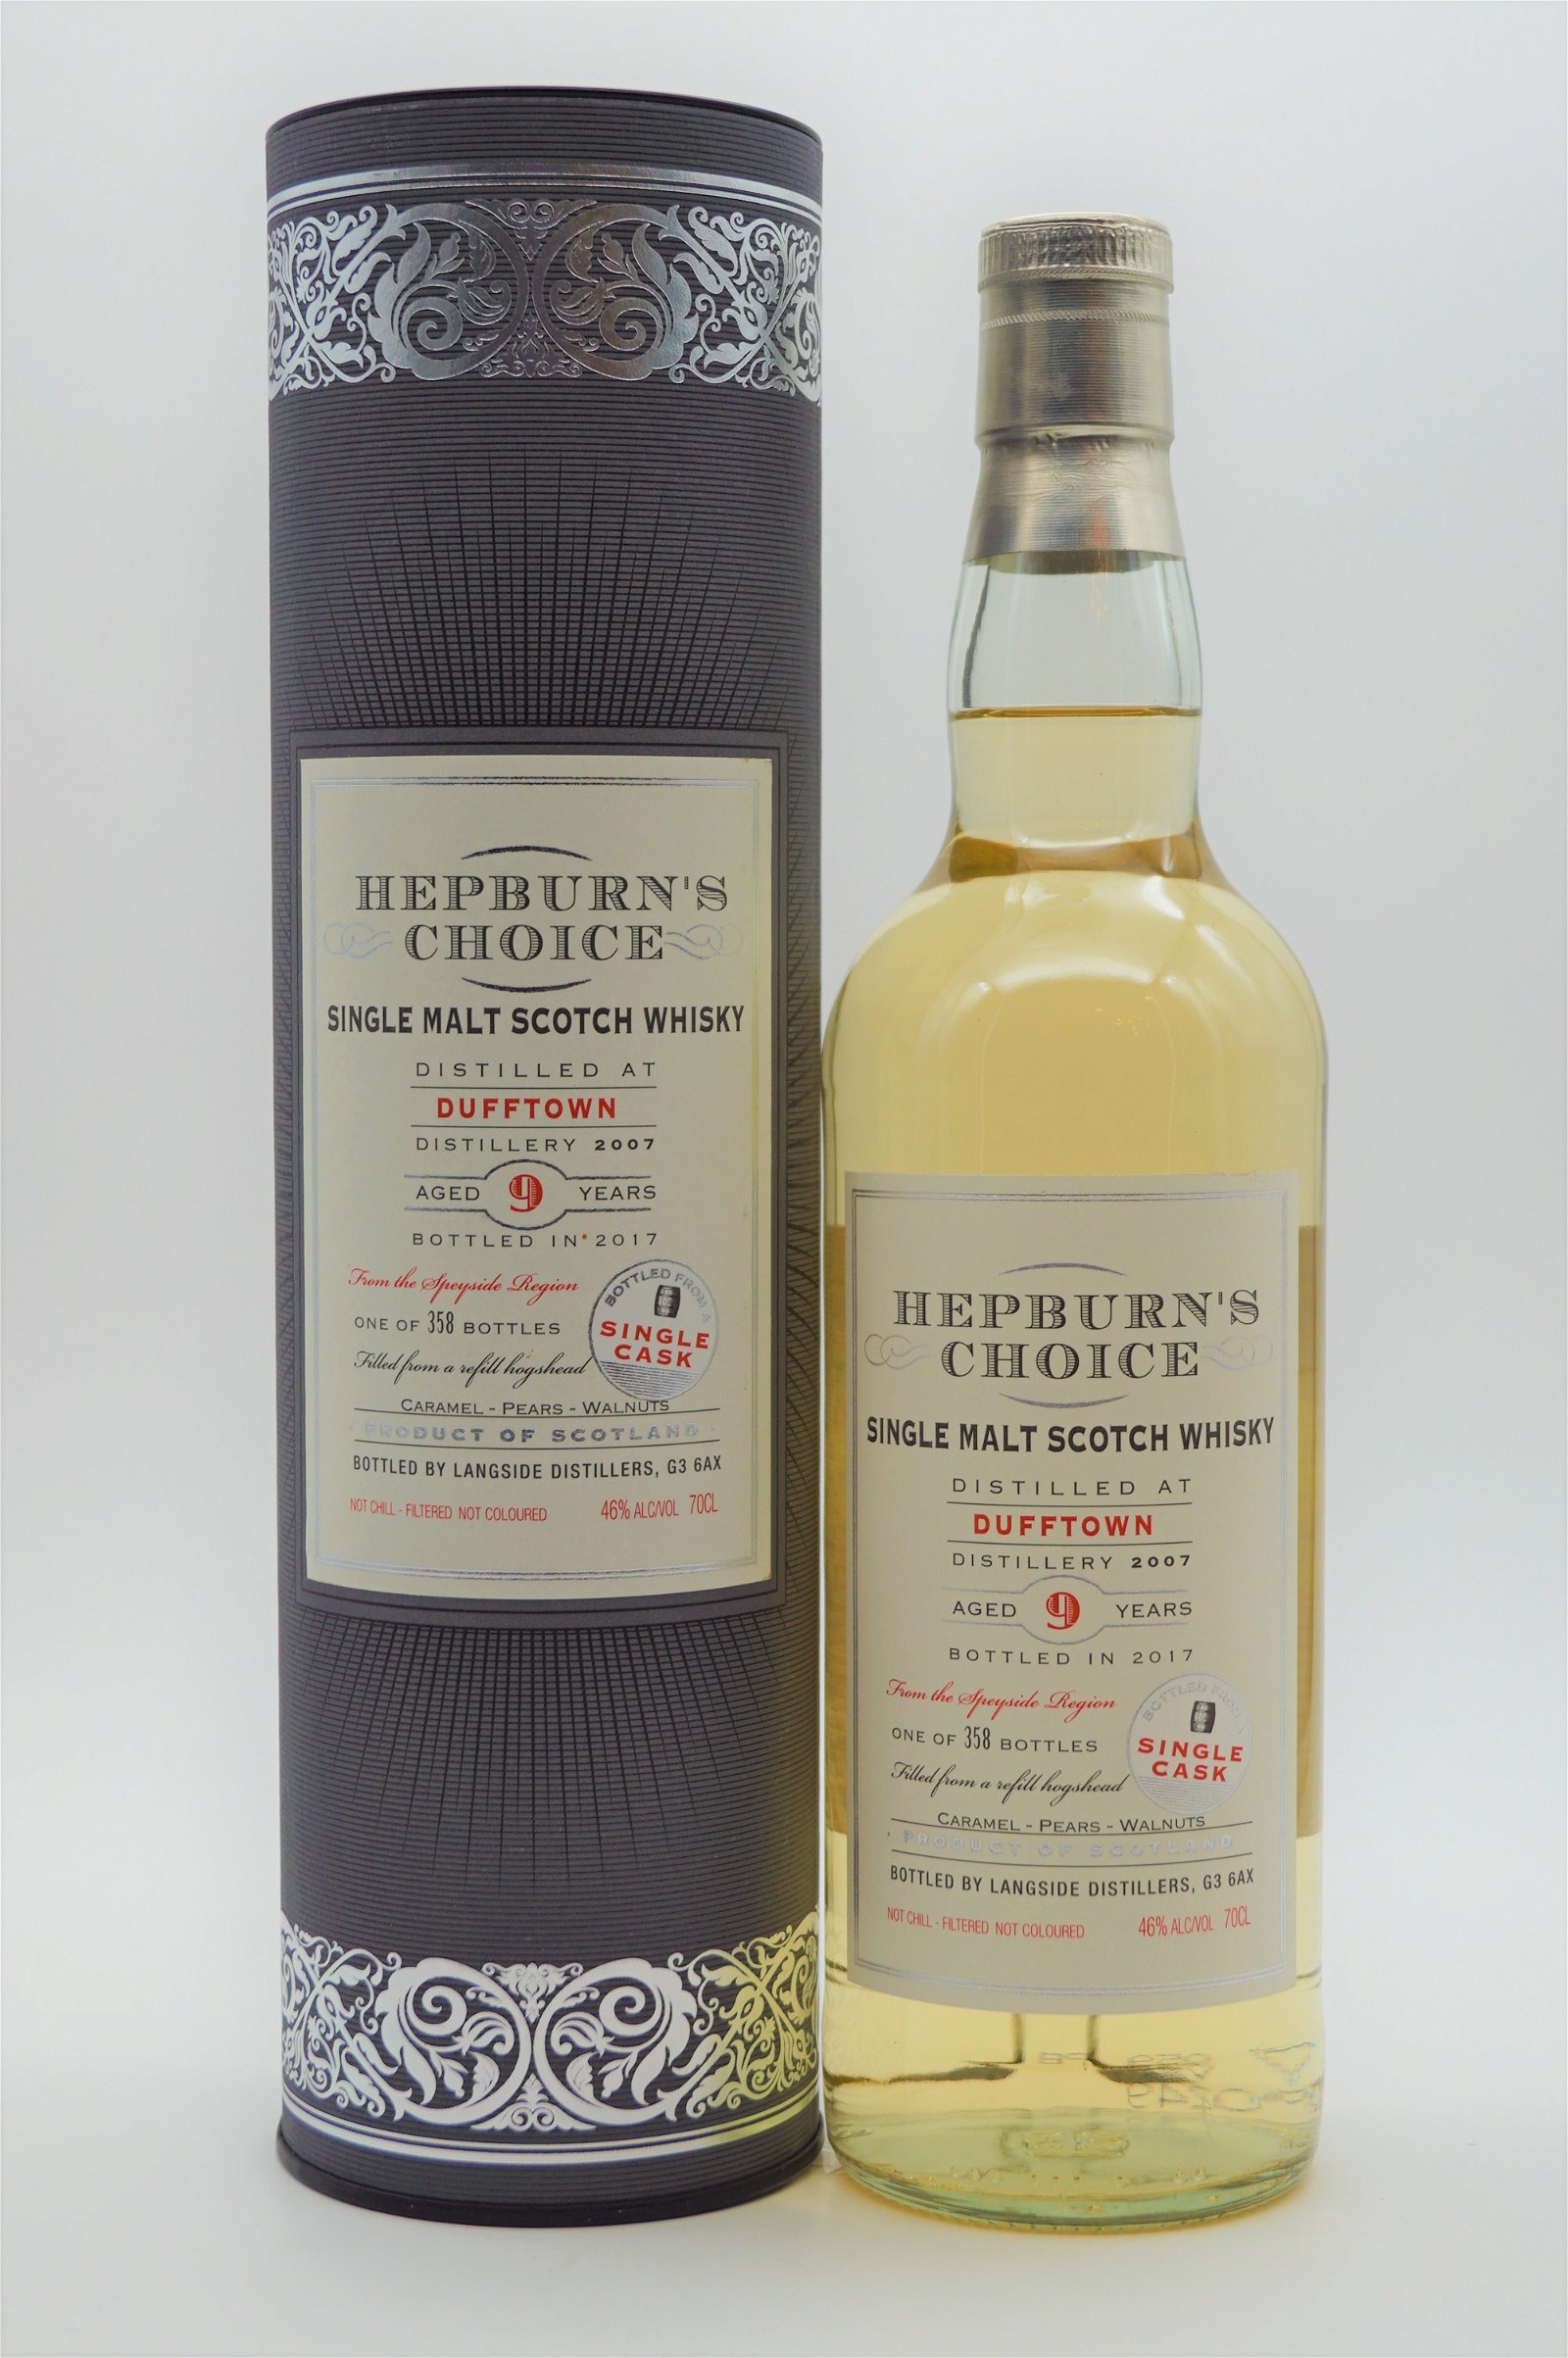 Hepburns Choice Dufftown 9 Jahre 2007/2017 - 358 Fl. Single Malt Scotch